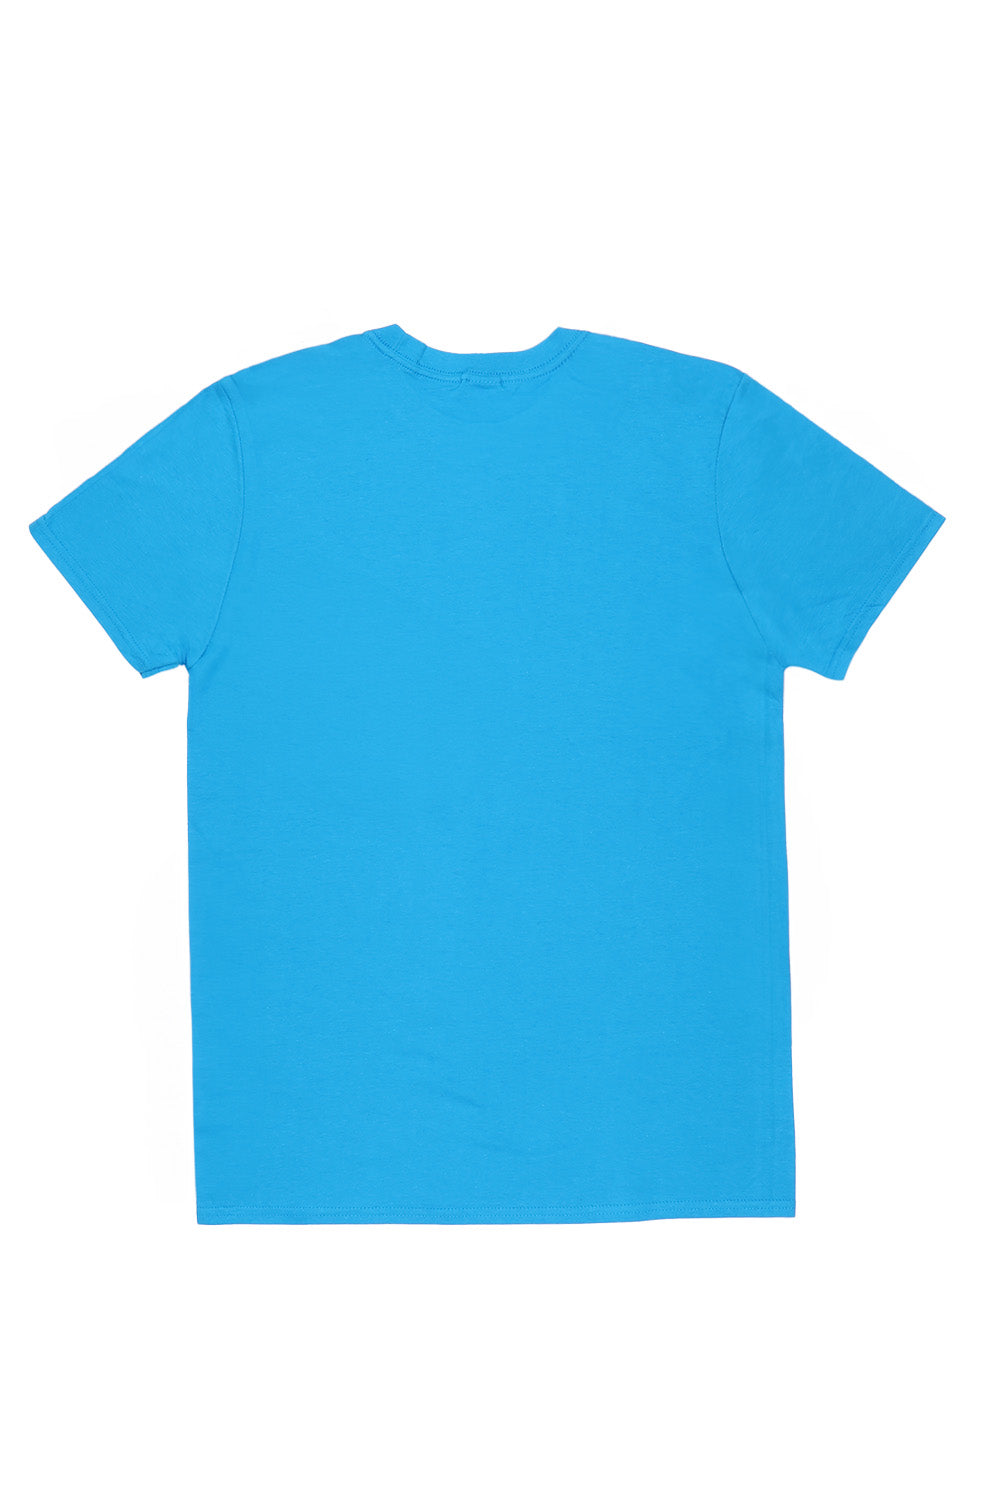 C'est La Vie Paris Slogan T-Shirt In Sapphire Blue (Custom Pack)